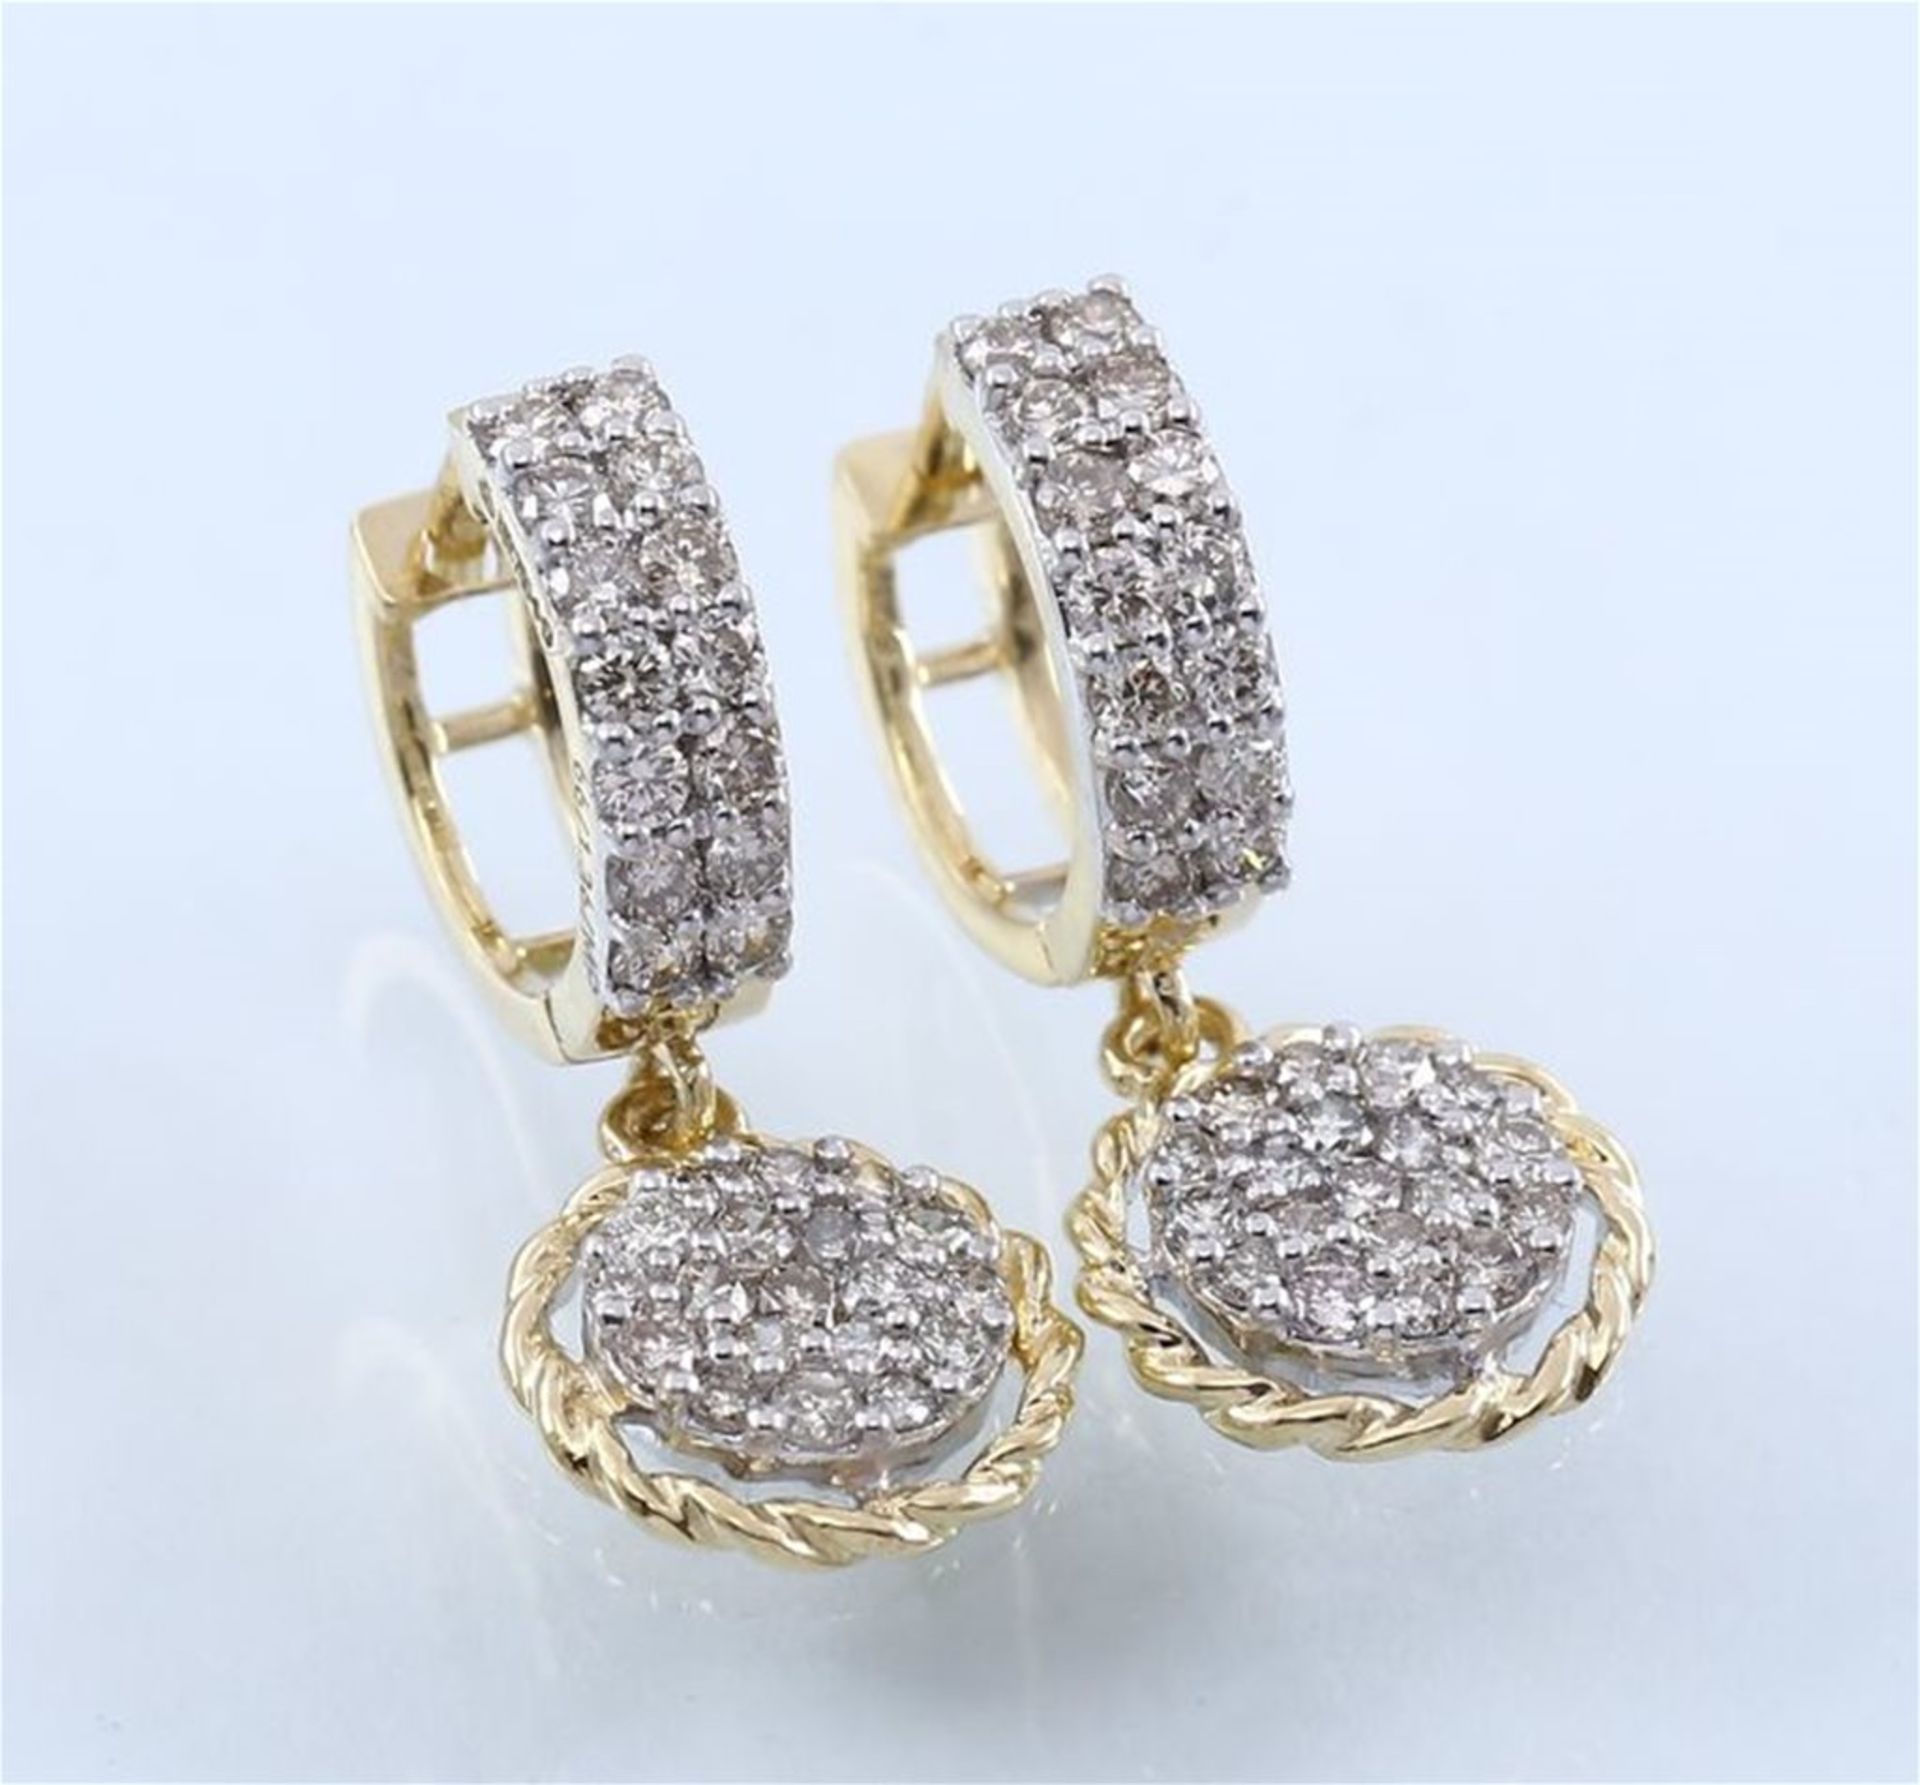 IGI Certified 18 K / 750 Yellow Gold Diamond Earrings - Image 3 of 7